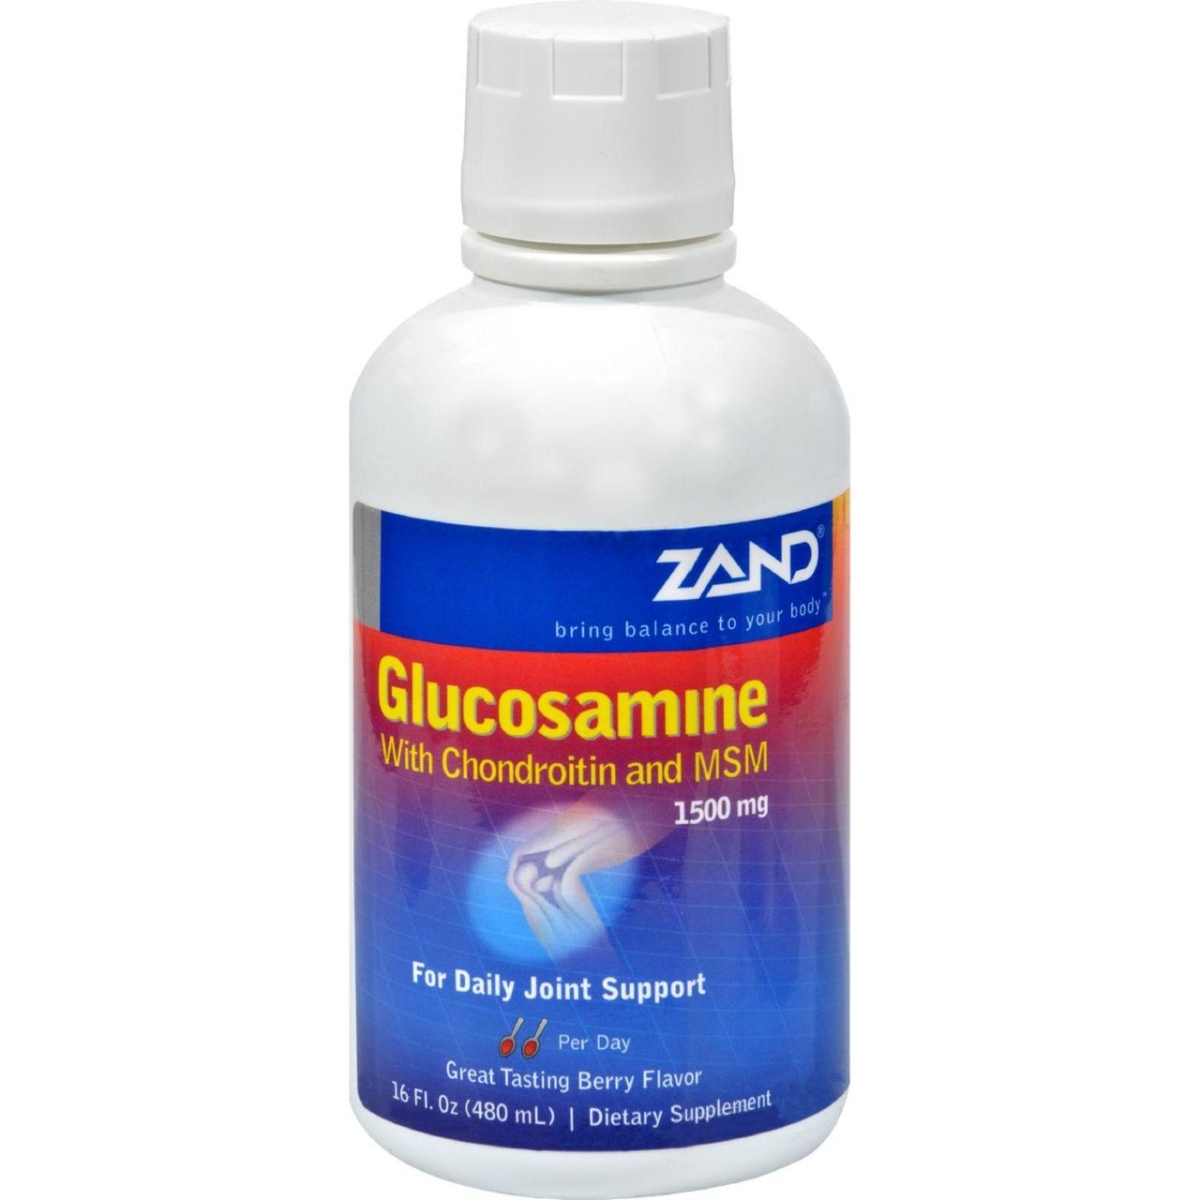 Hg0559450 16 Fl Oz Glucosamine With Chondroitin & Msm Berry - 1500 Mg